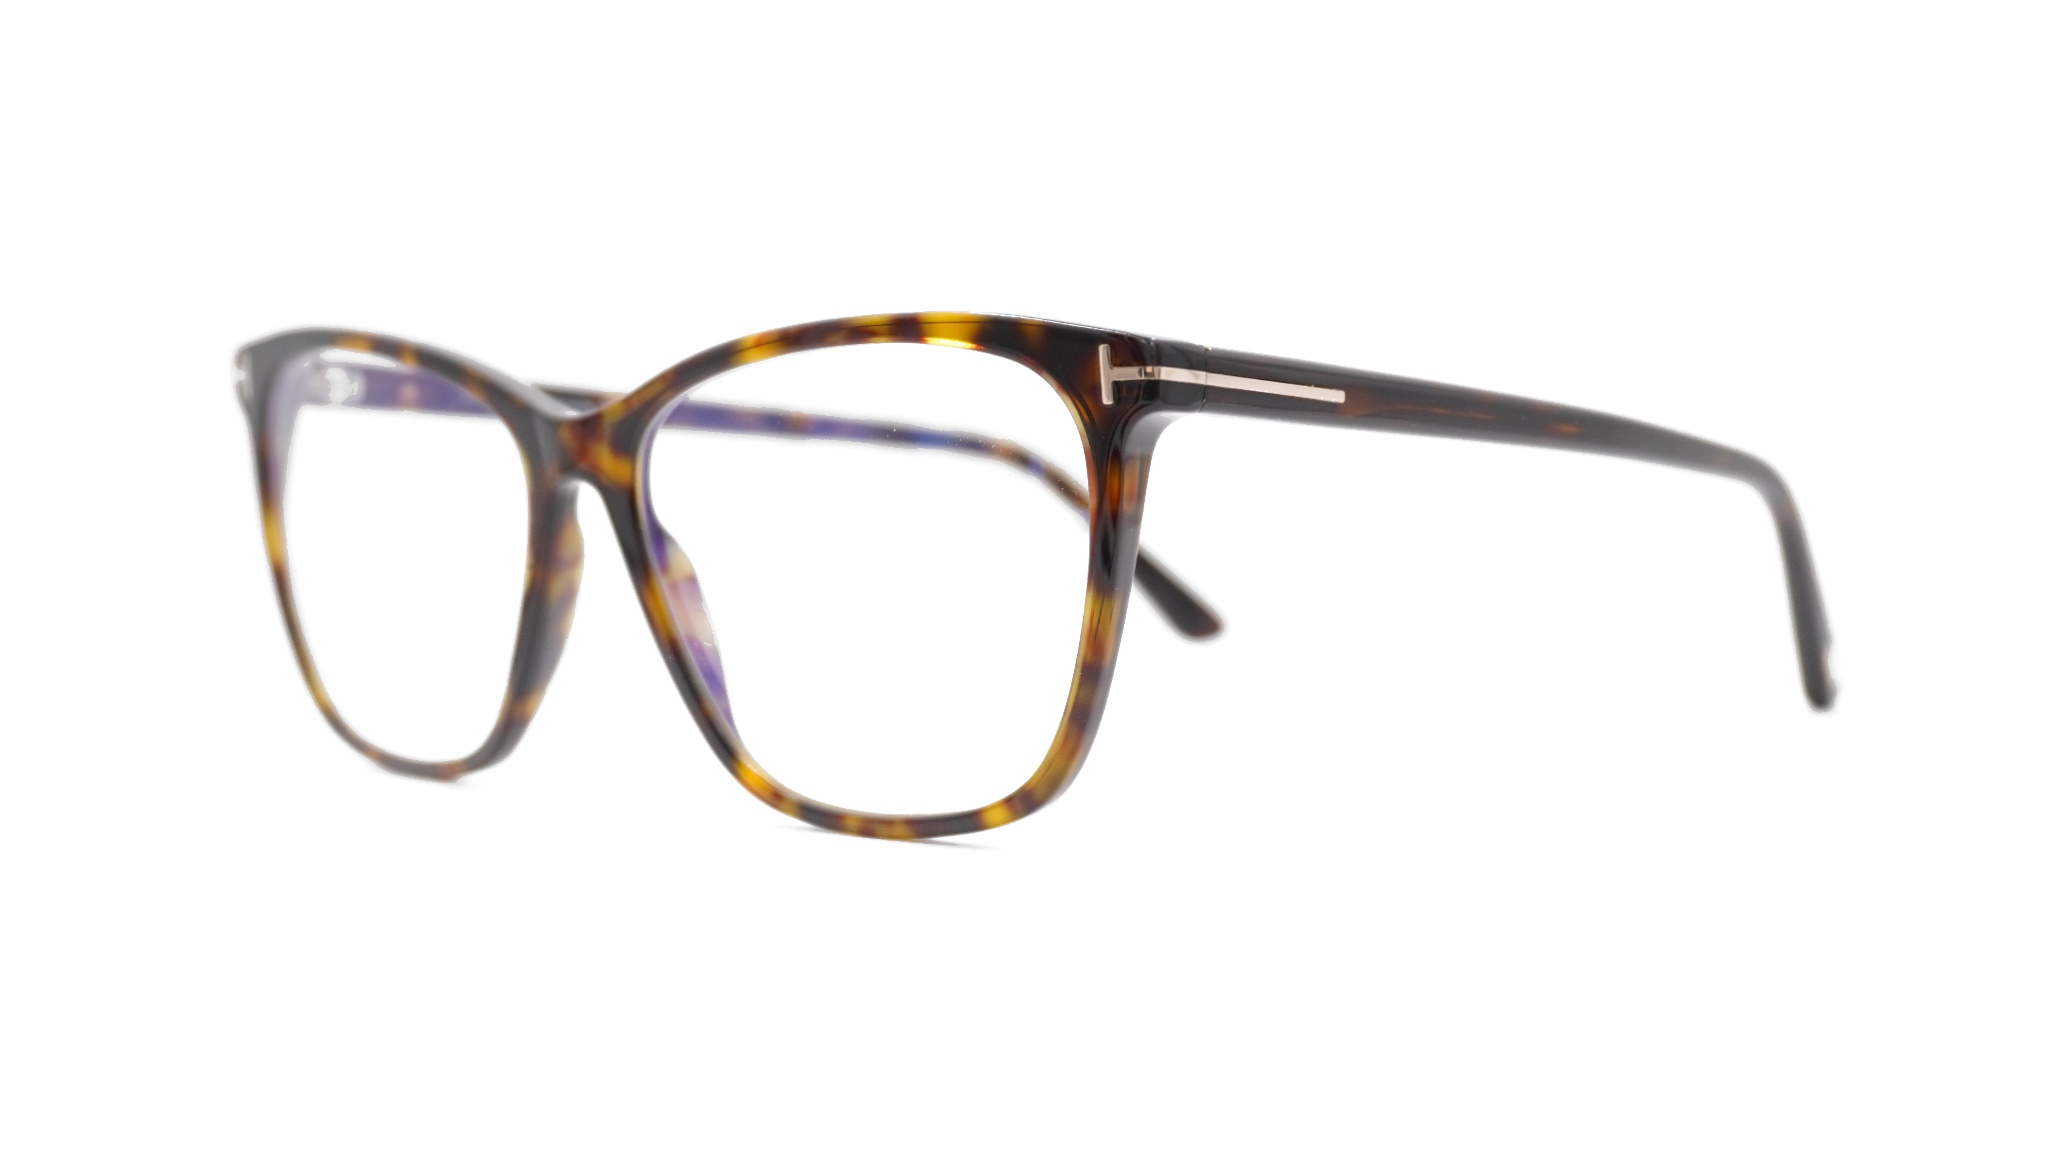 Glasses Tom-ford Tf5762-b, brown colour - Doyle